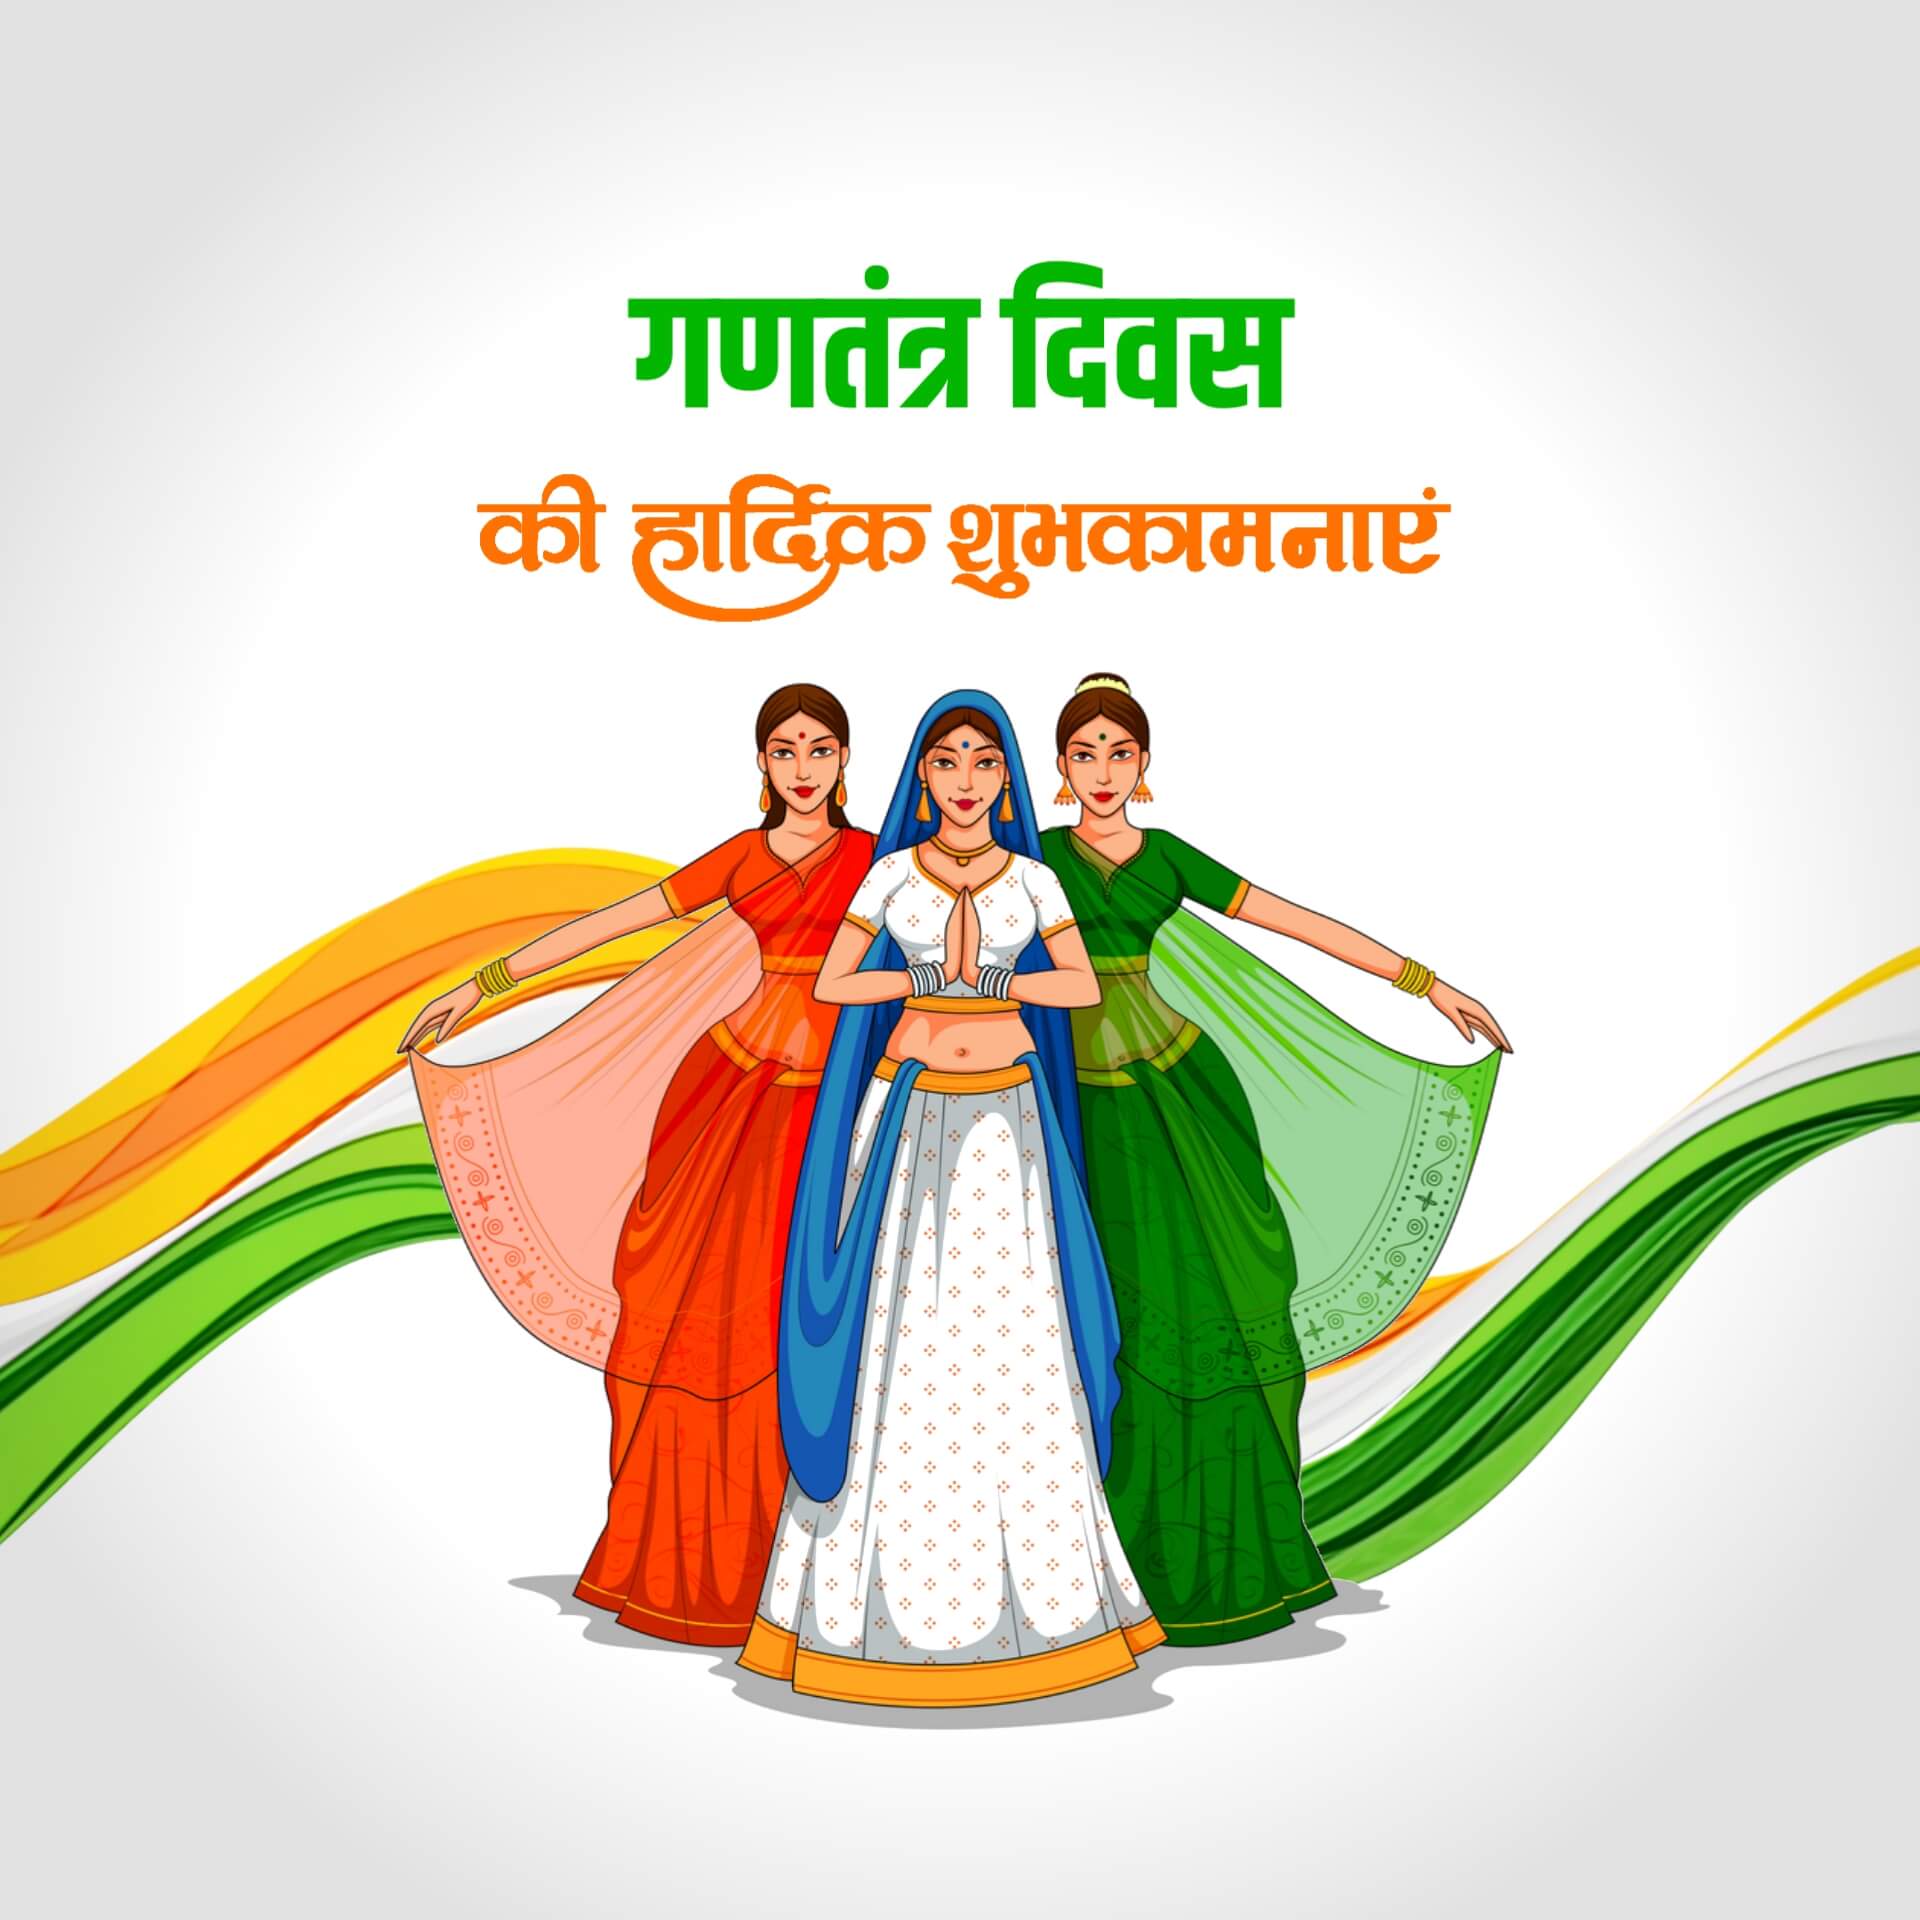 Happy Republic Day Image in Hindi